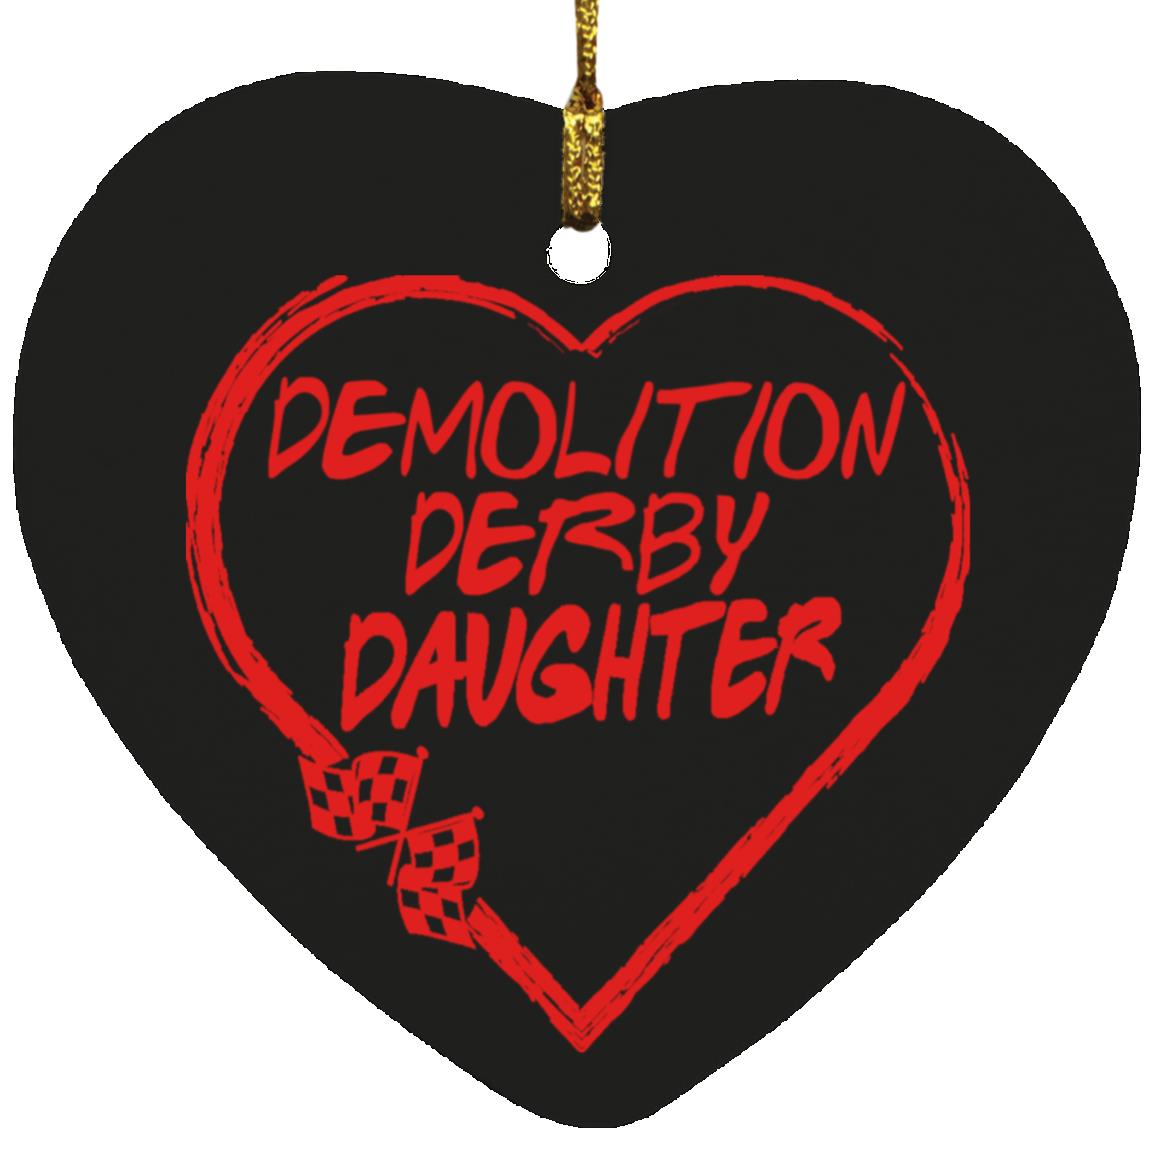 Demolition Derby Daughter Heart Ornament